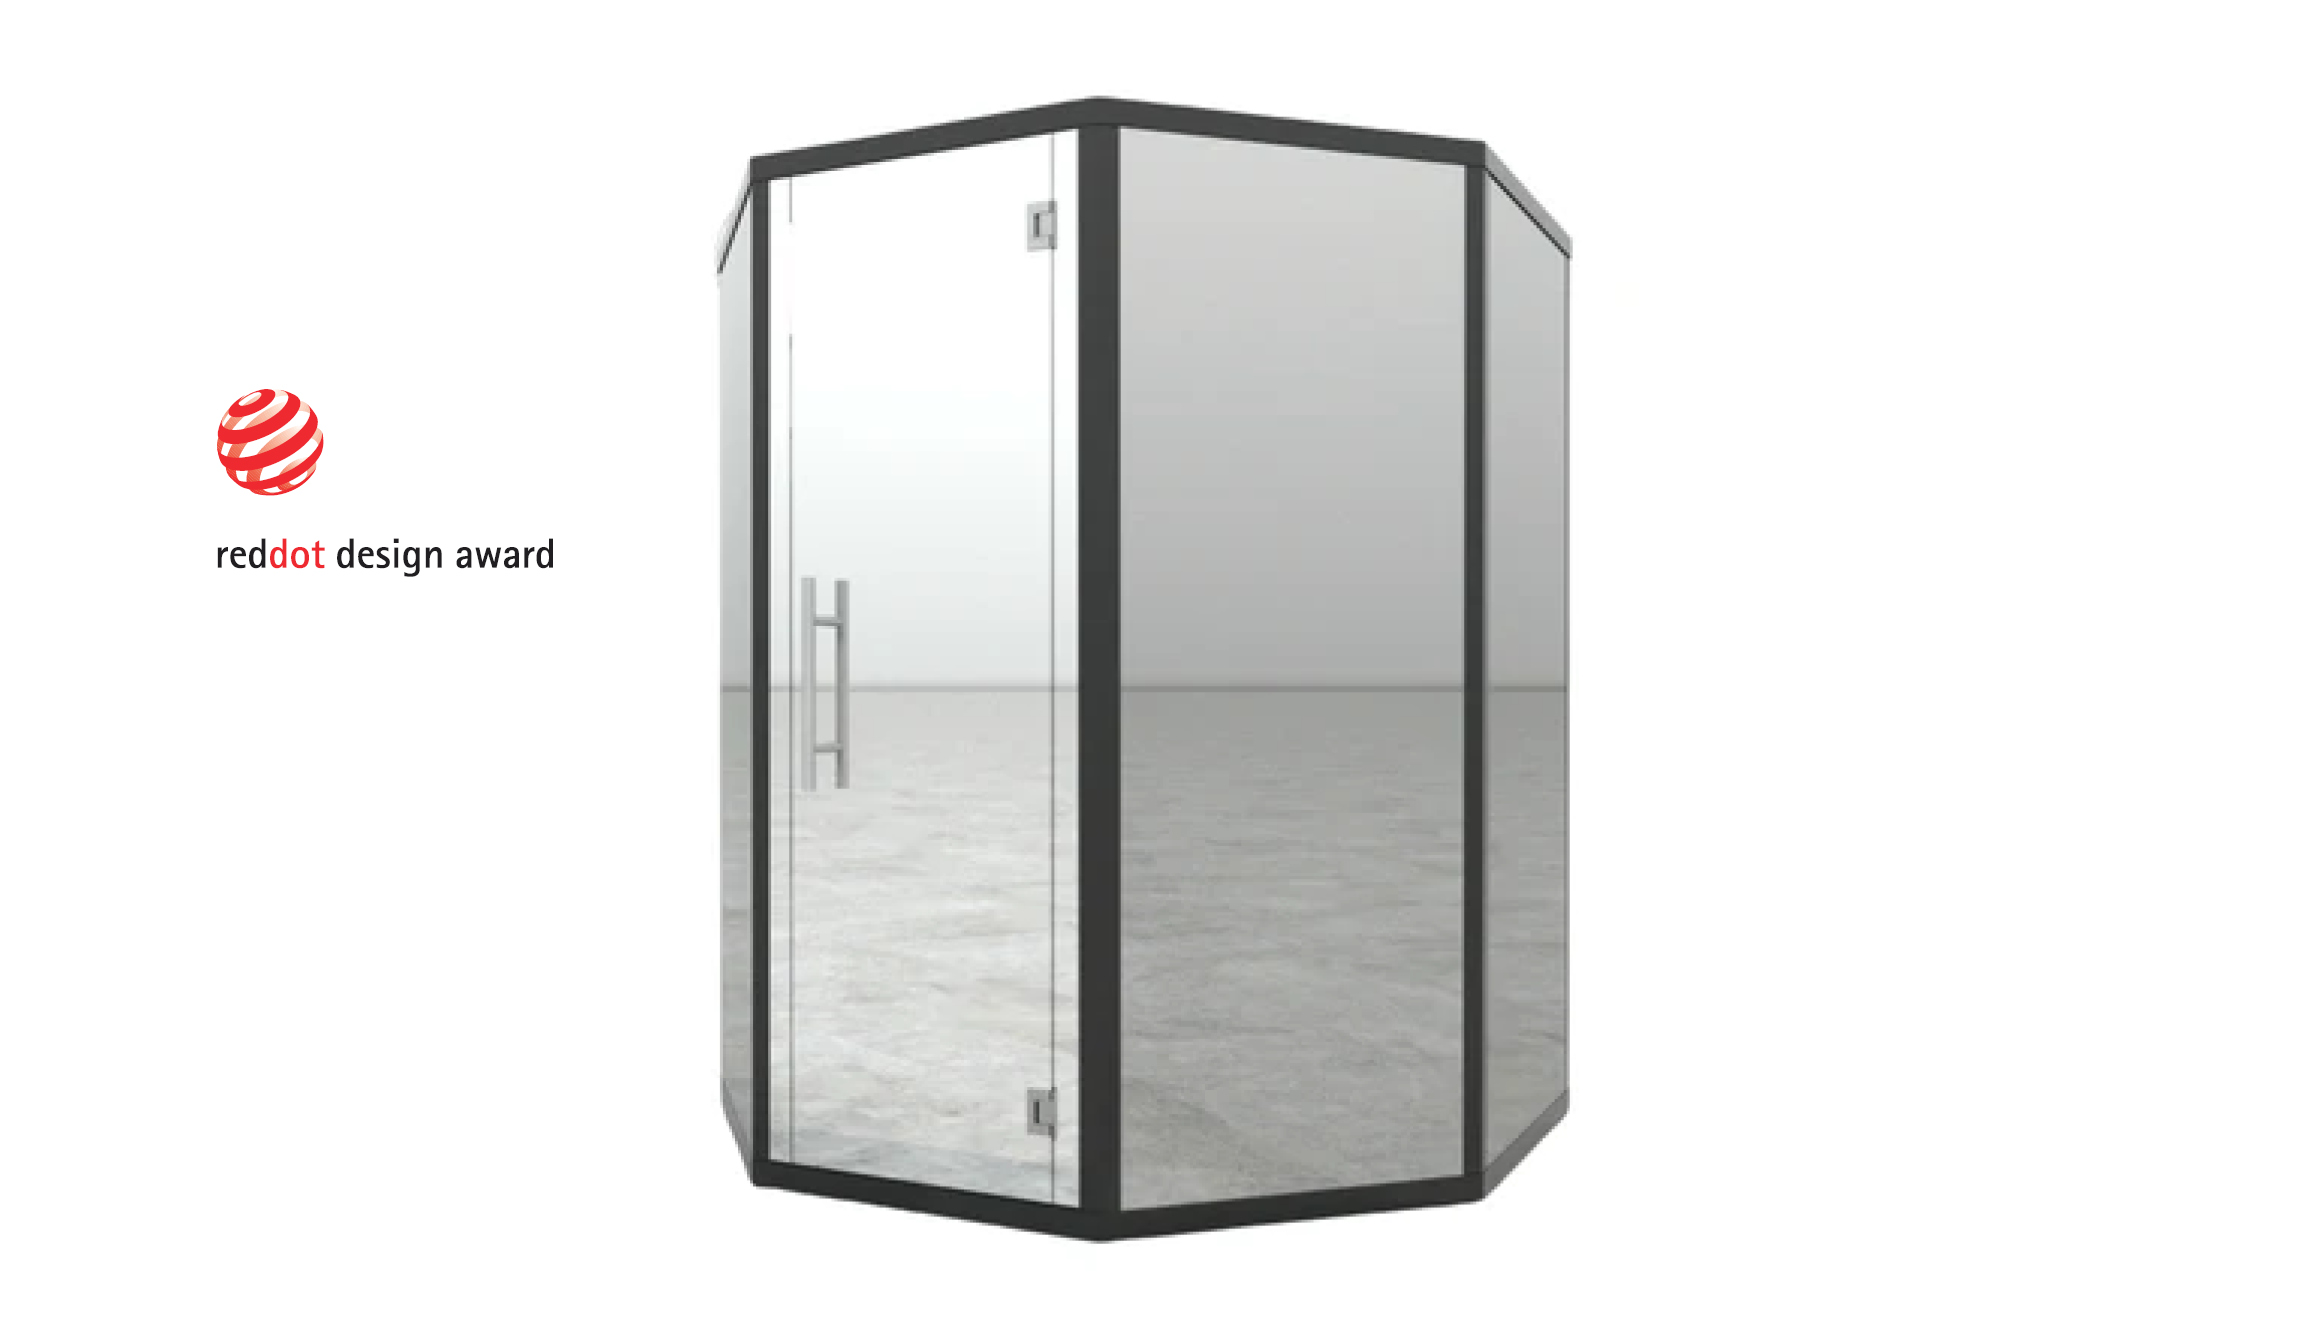 Haljas Single Luxury glass Sauna Reddot